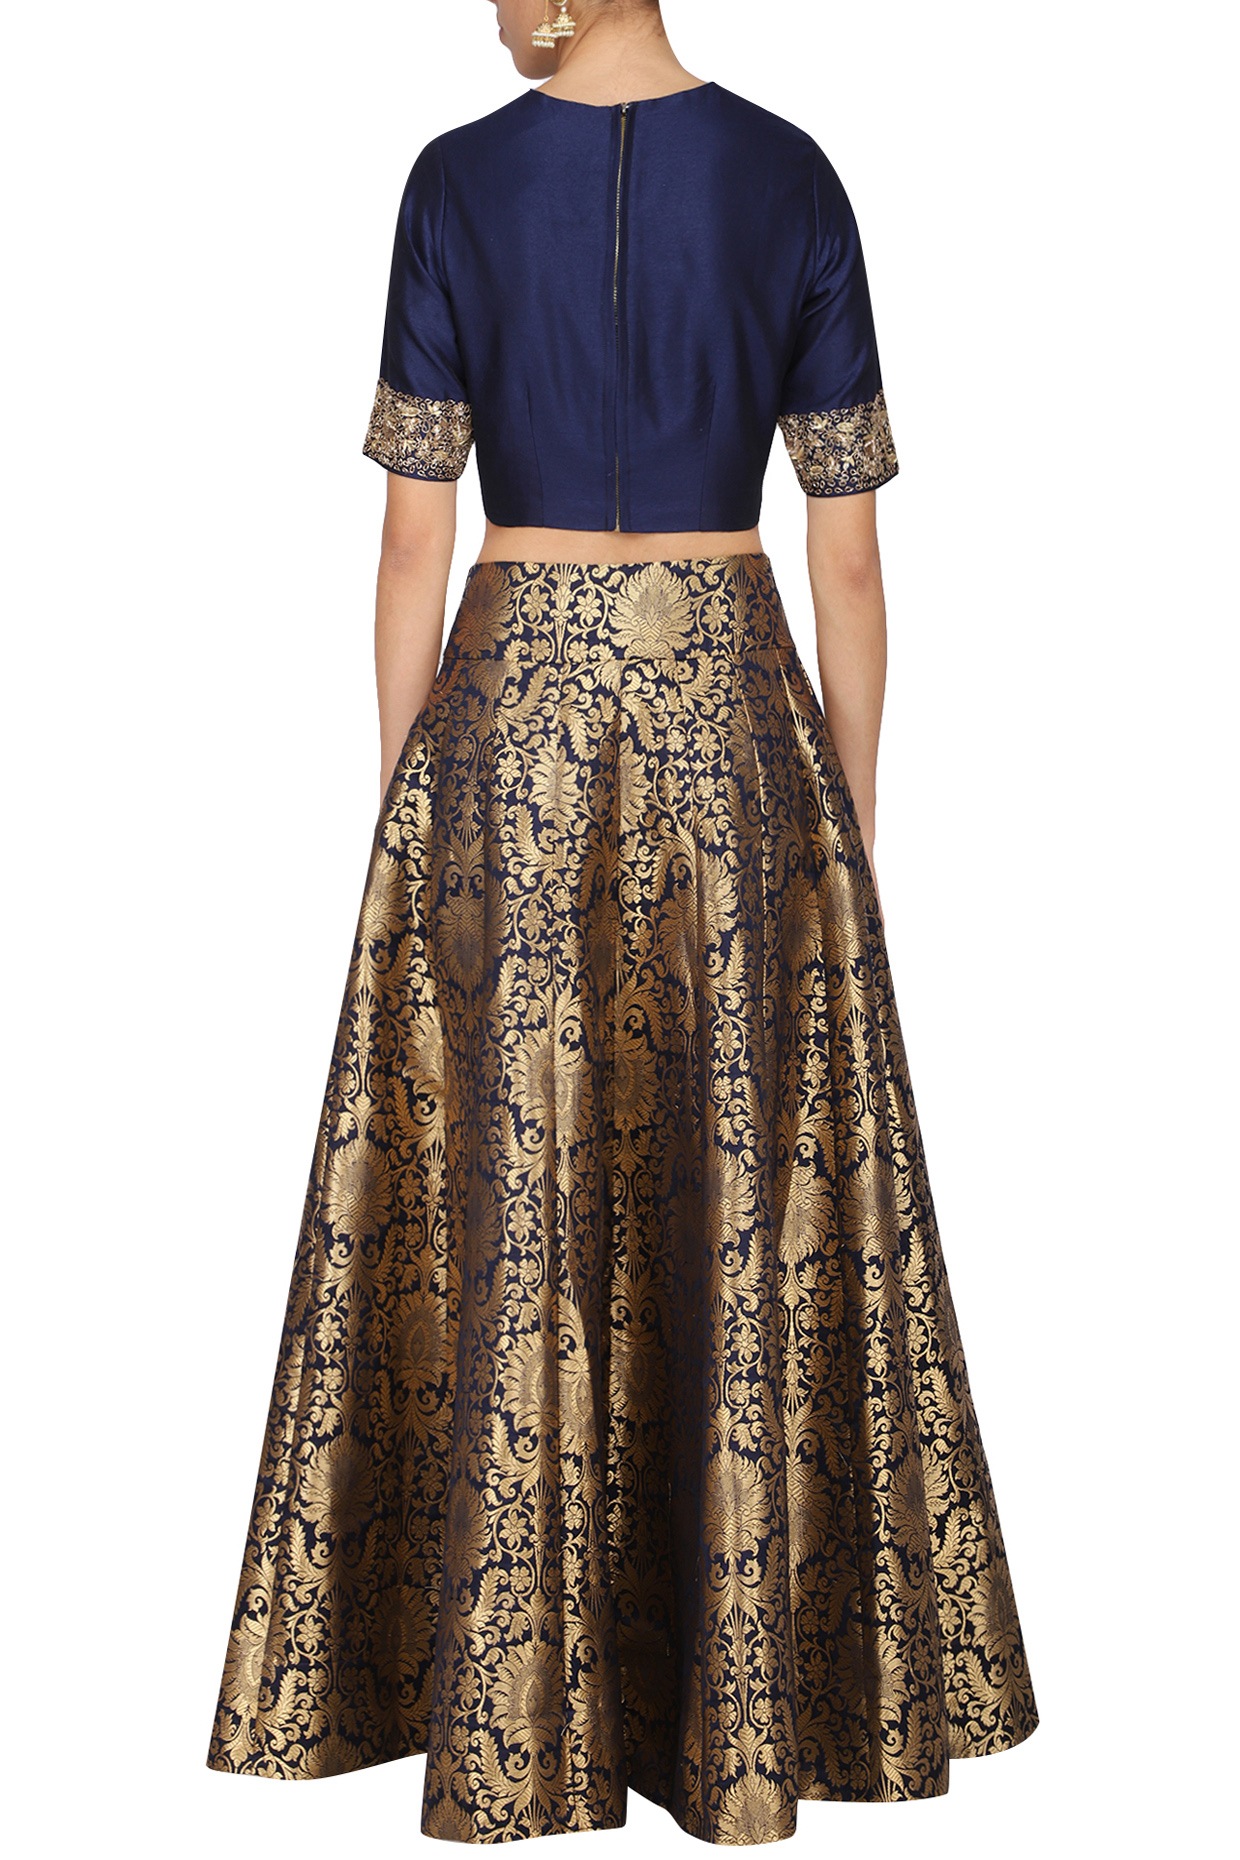 Women Lehenga Choli Cotton Bagru Printed Designer Top Skirt With Kota  Dupatta | eBay